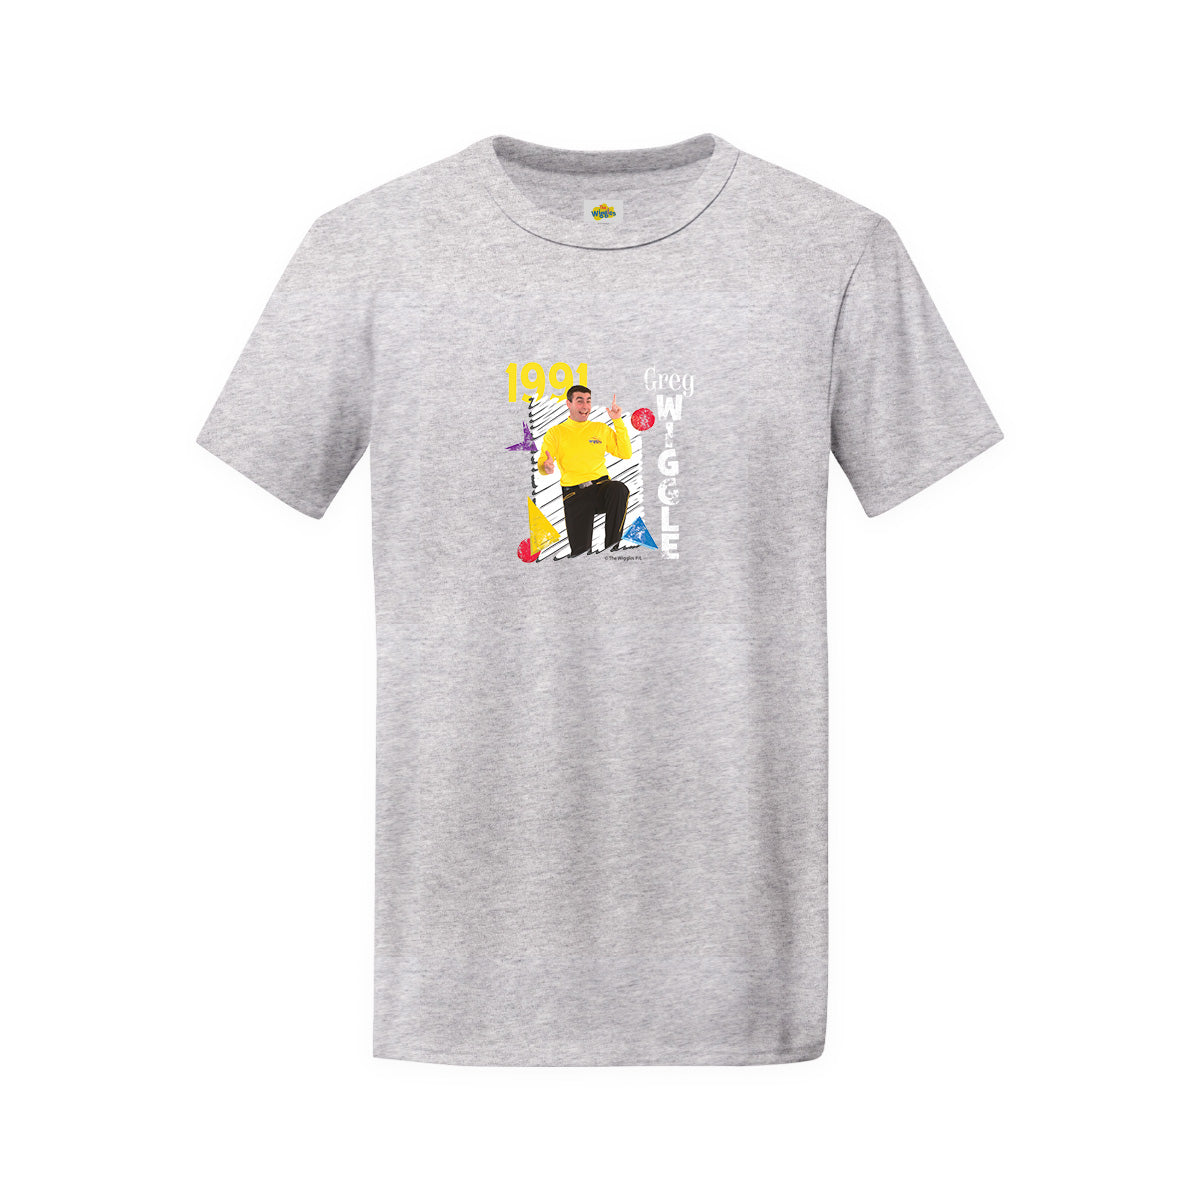 The Wiggles Adult Original Retro Short Sleeve T-shirt Greg